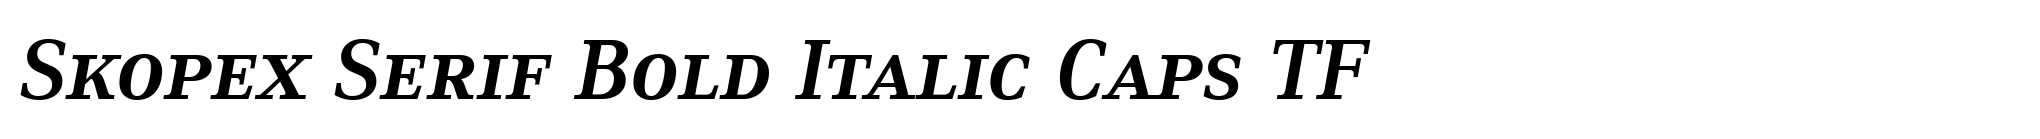 Skopex Serif Bold Italic Caps TF image